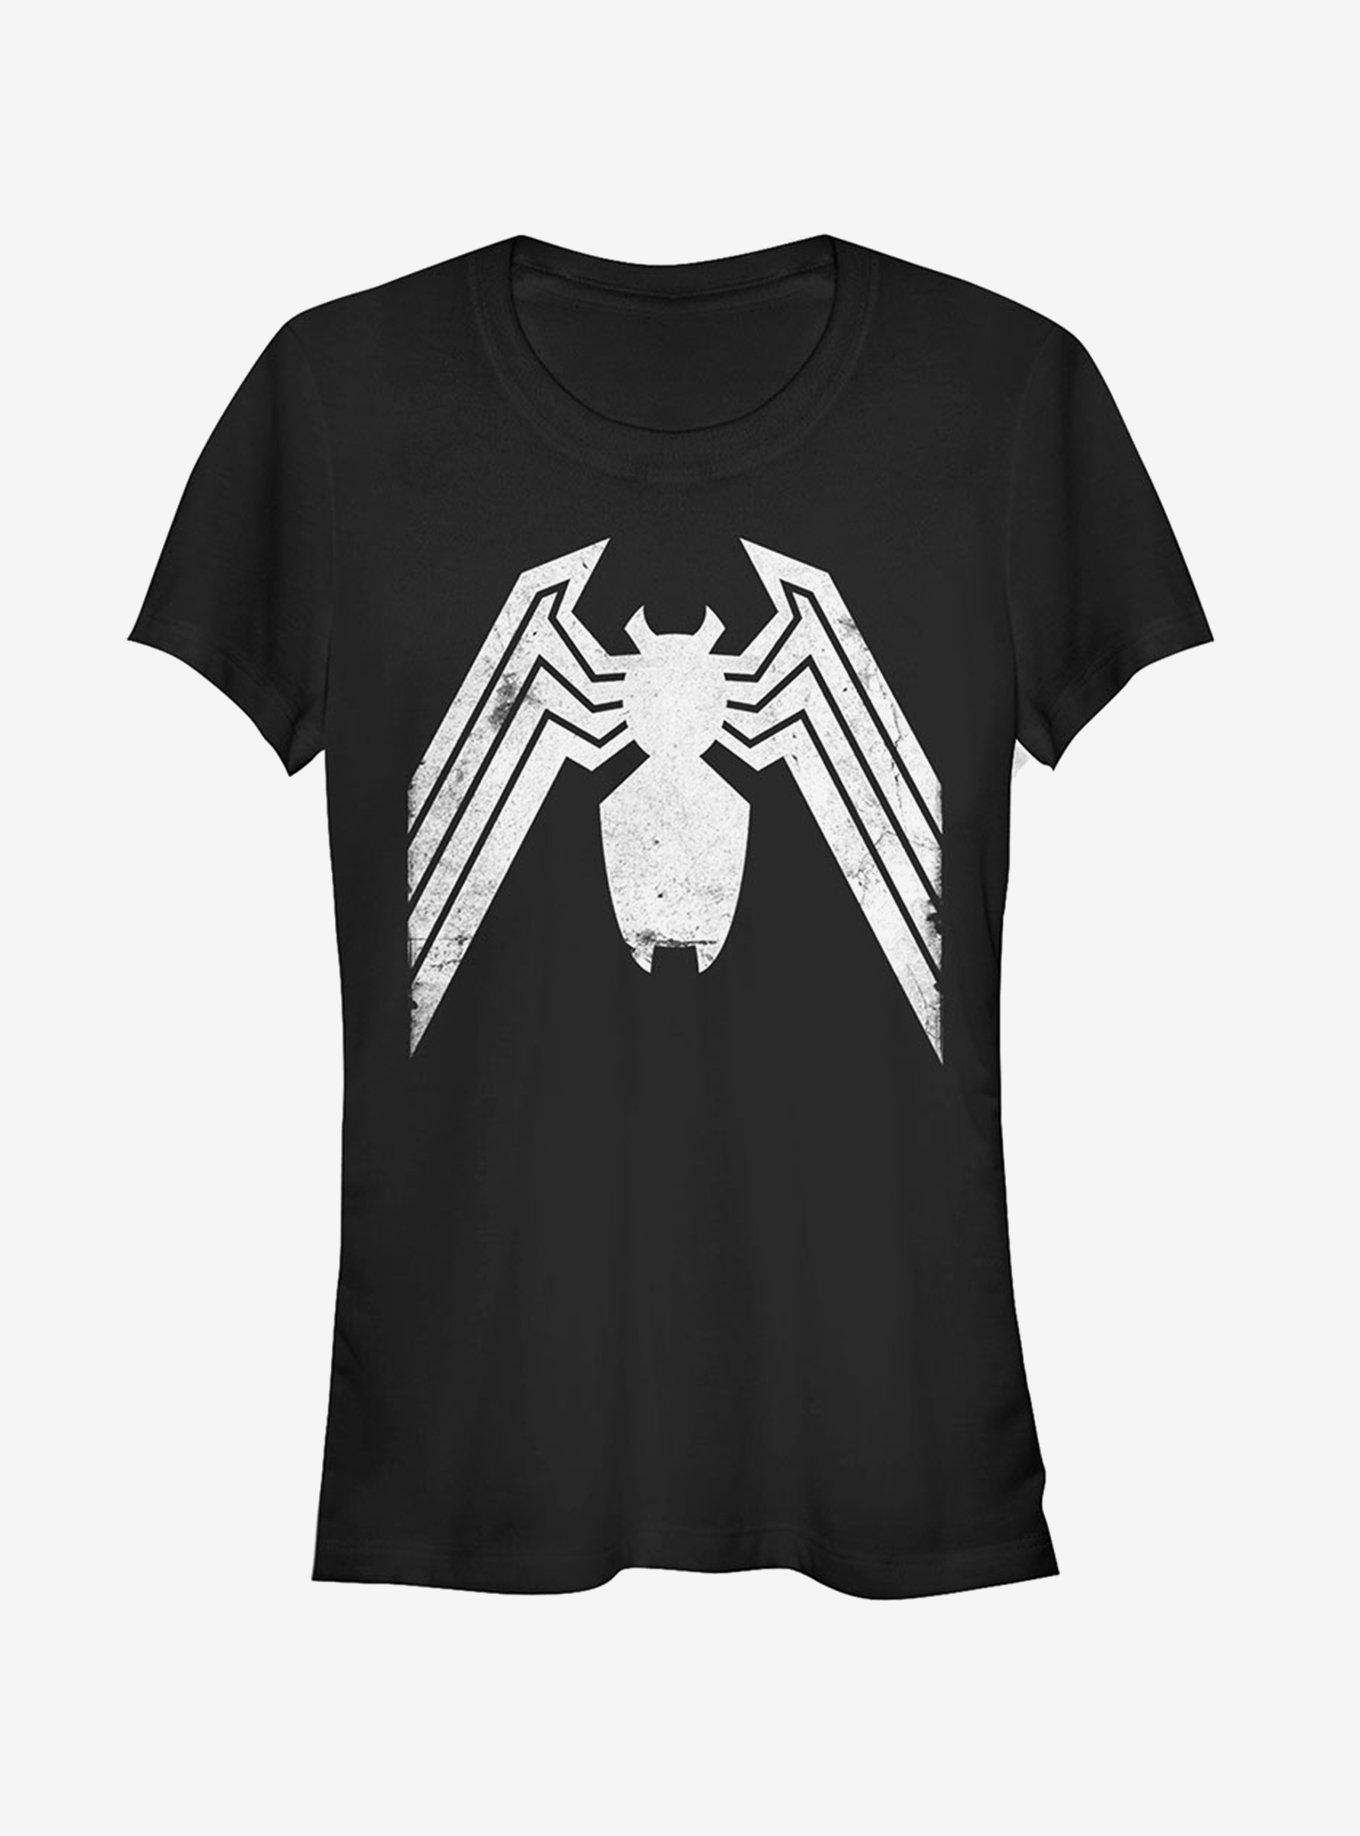 Marvel Venom Distressed Logo Girls T-Shirt, BLACK, hi-res